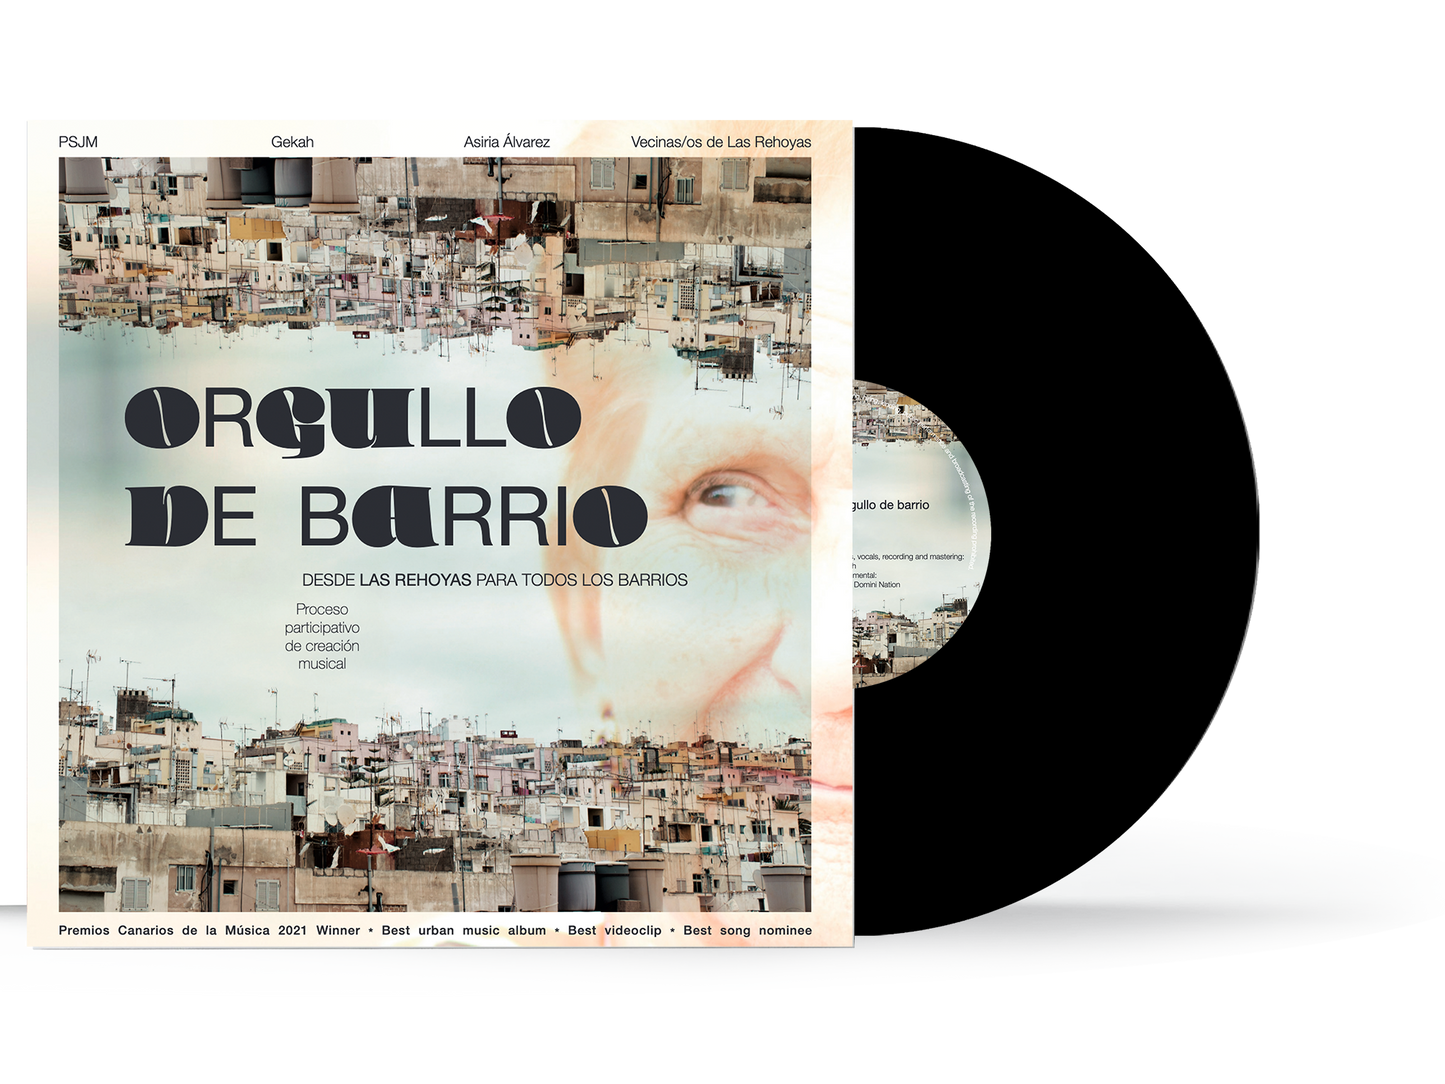 Orgullo De Barrio by GEKAH